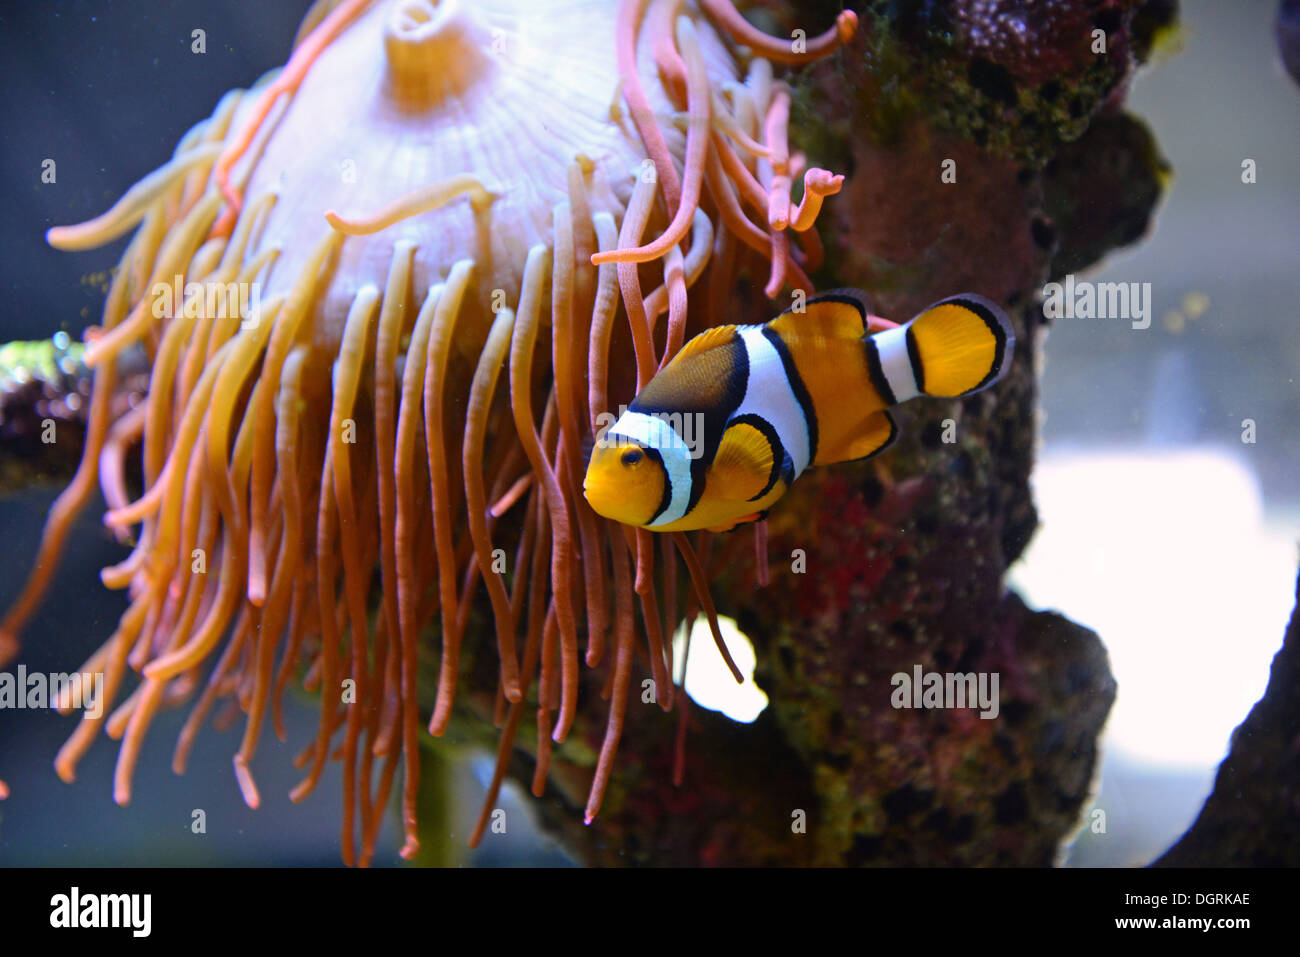 Clownfish (Anemonefish) in sea anemone, Blue Reef Aquarium, Towan Beach promenade, Newquay, Cornwall, England, United Kingdom Stock Photo